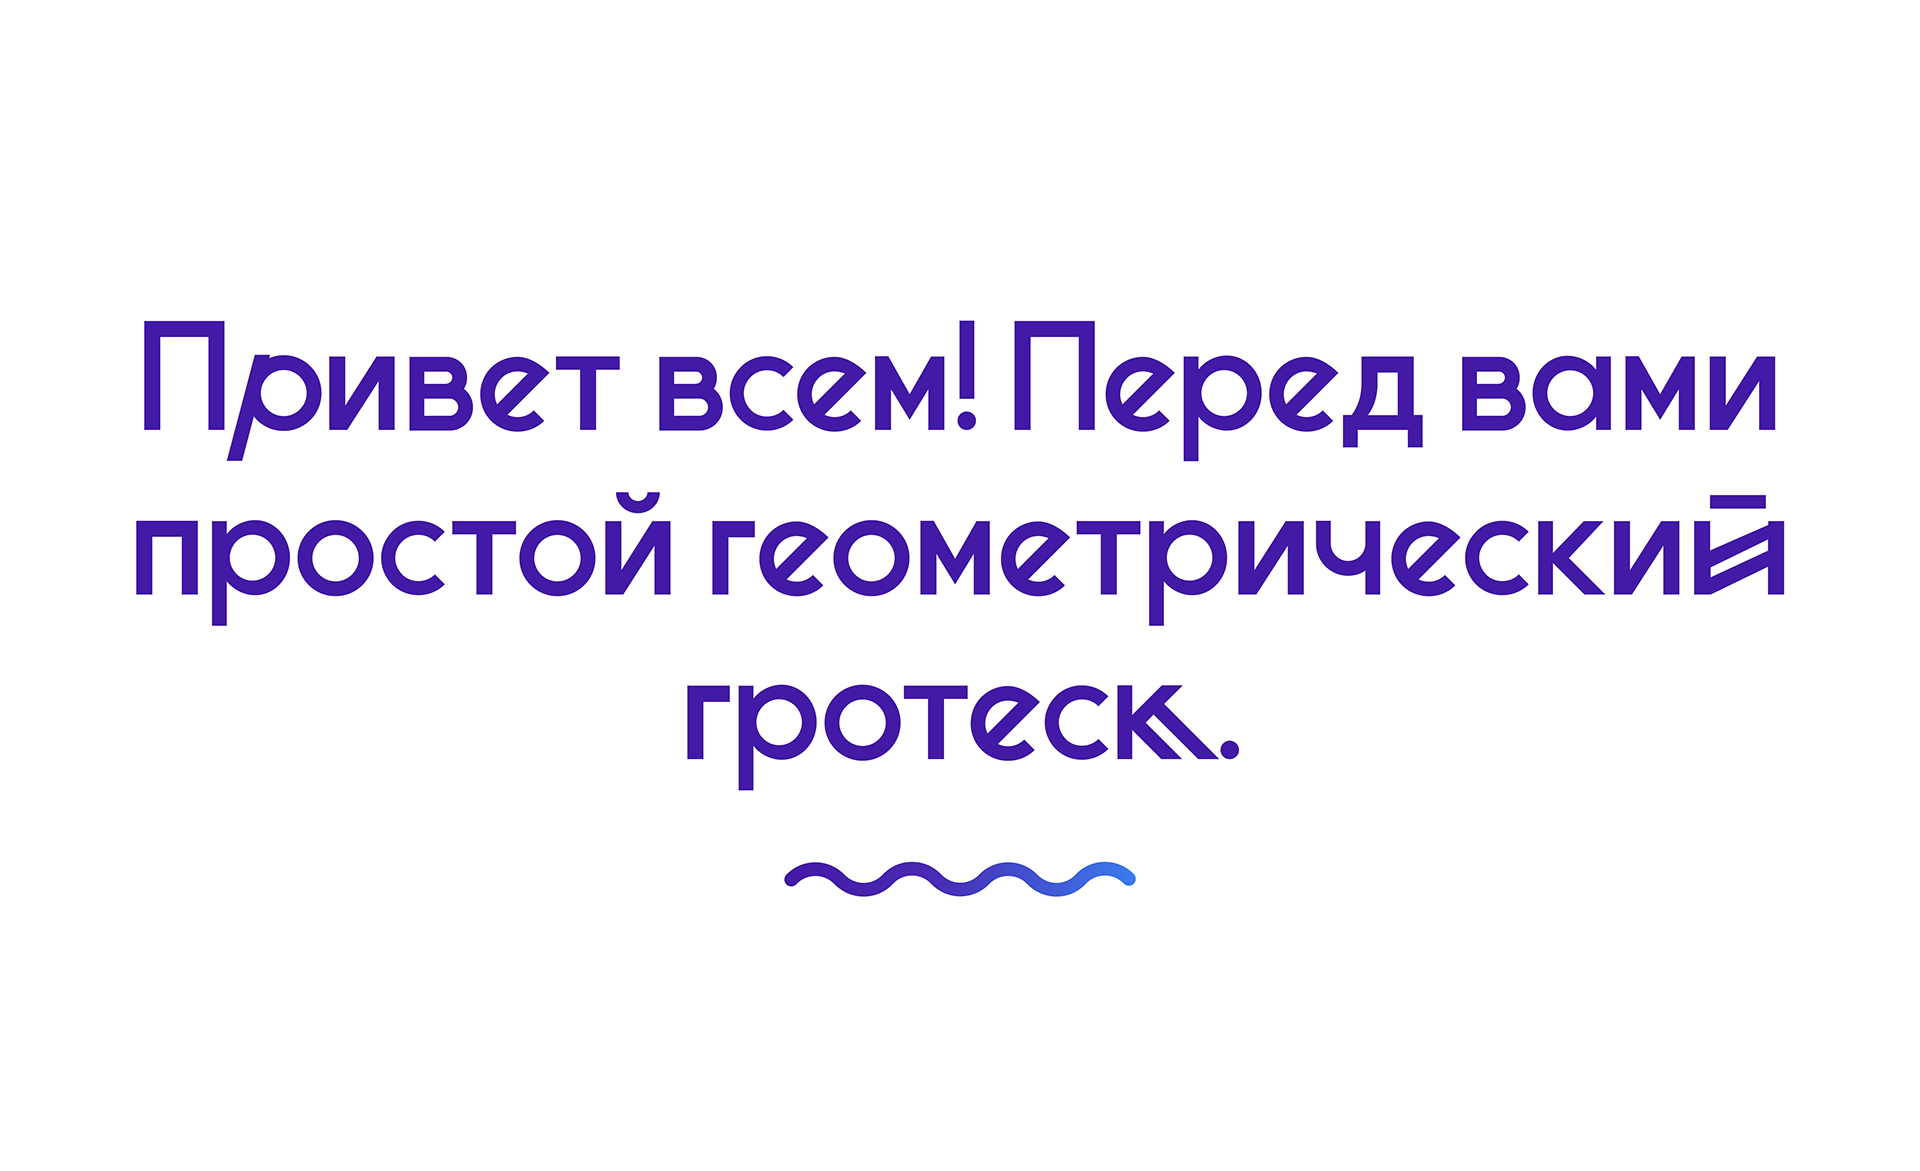 Example font Minsk #3